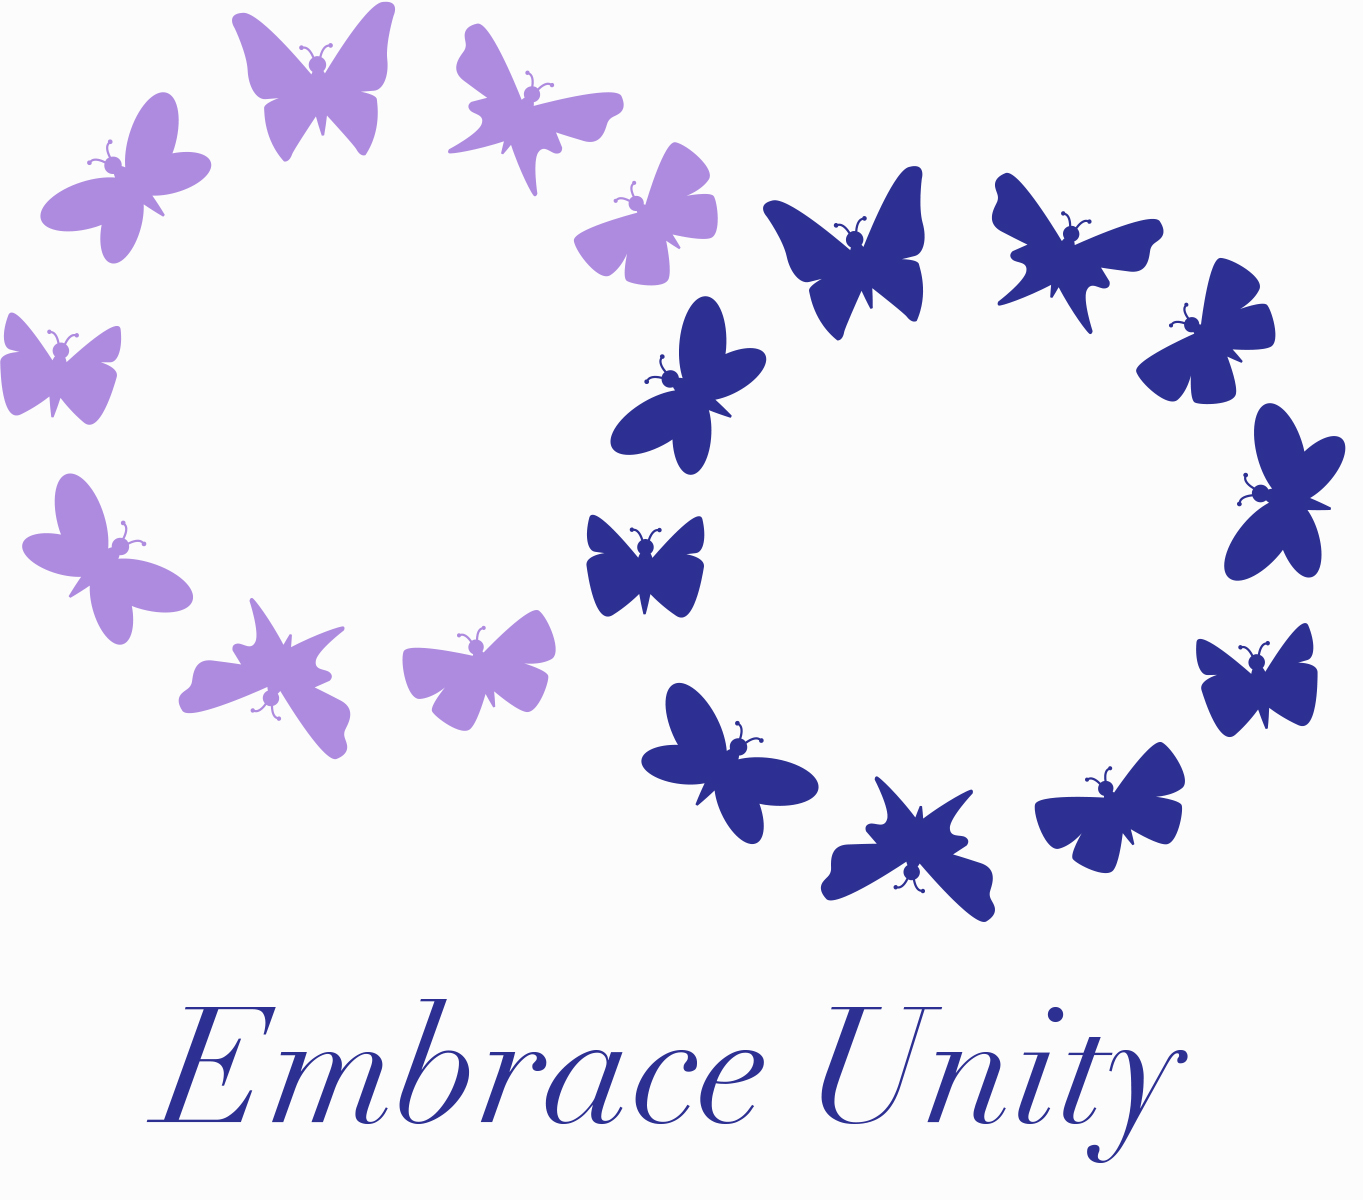 Embrace Unity logo.jpg